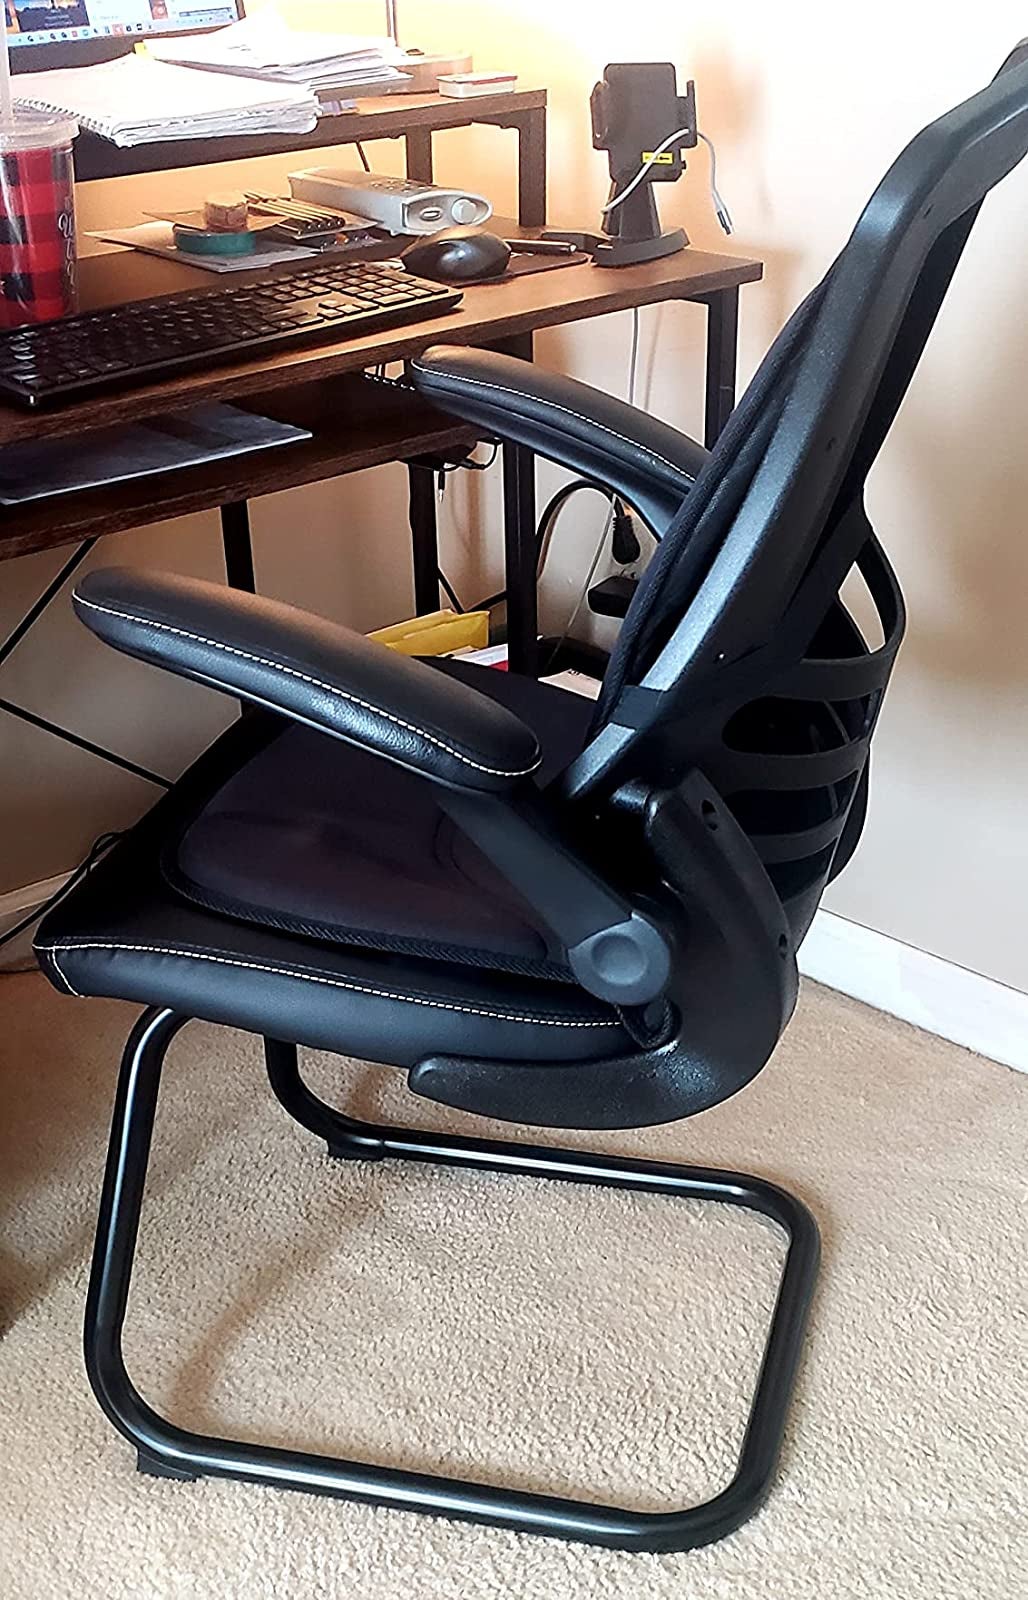 BestOffice Ergonomic Desk Armless Mesh Computer Lumbar Support Swivel Rolling Executive Adjustable Task Chair for Back Pain (Blue)